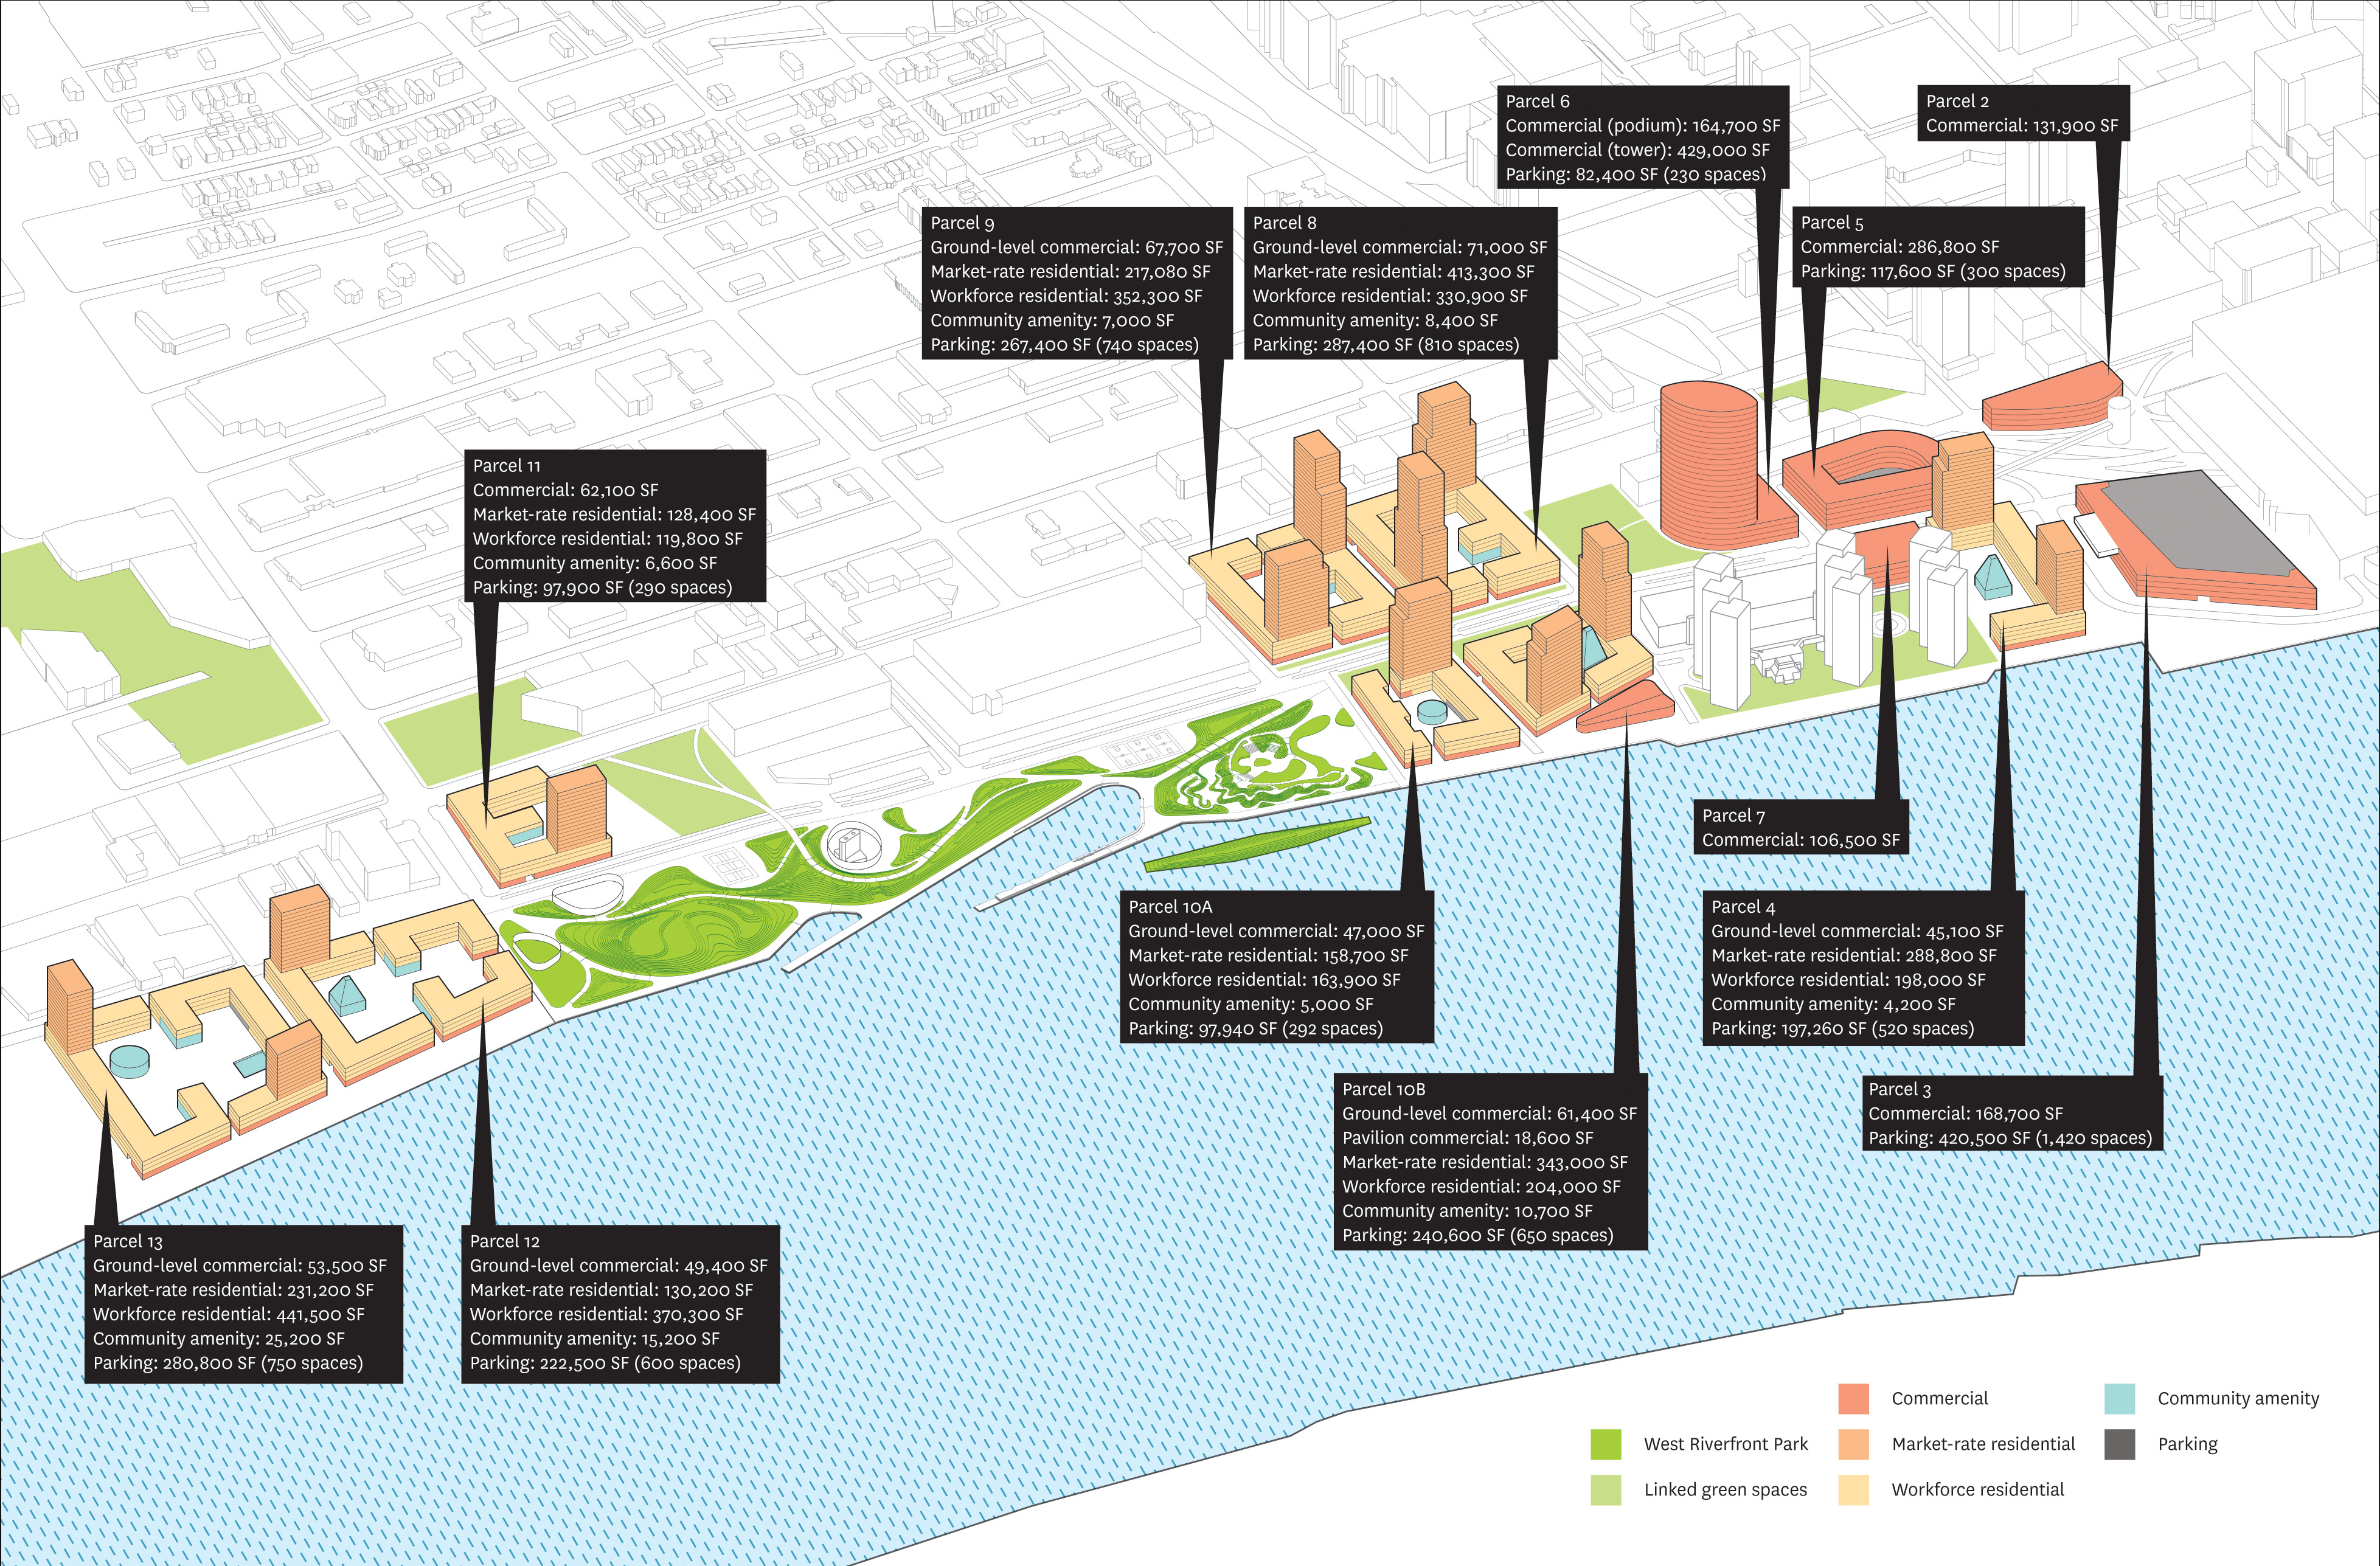 Utile joins MVVA and David Adjaye in transformation of Detroit’s West Riverfront Park